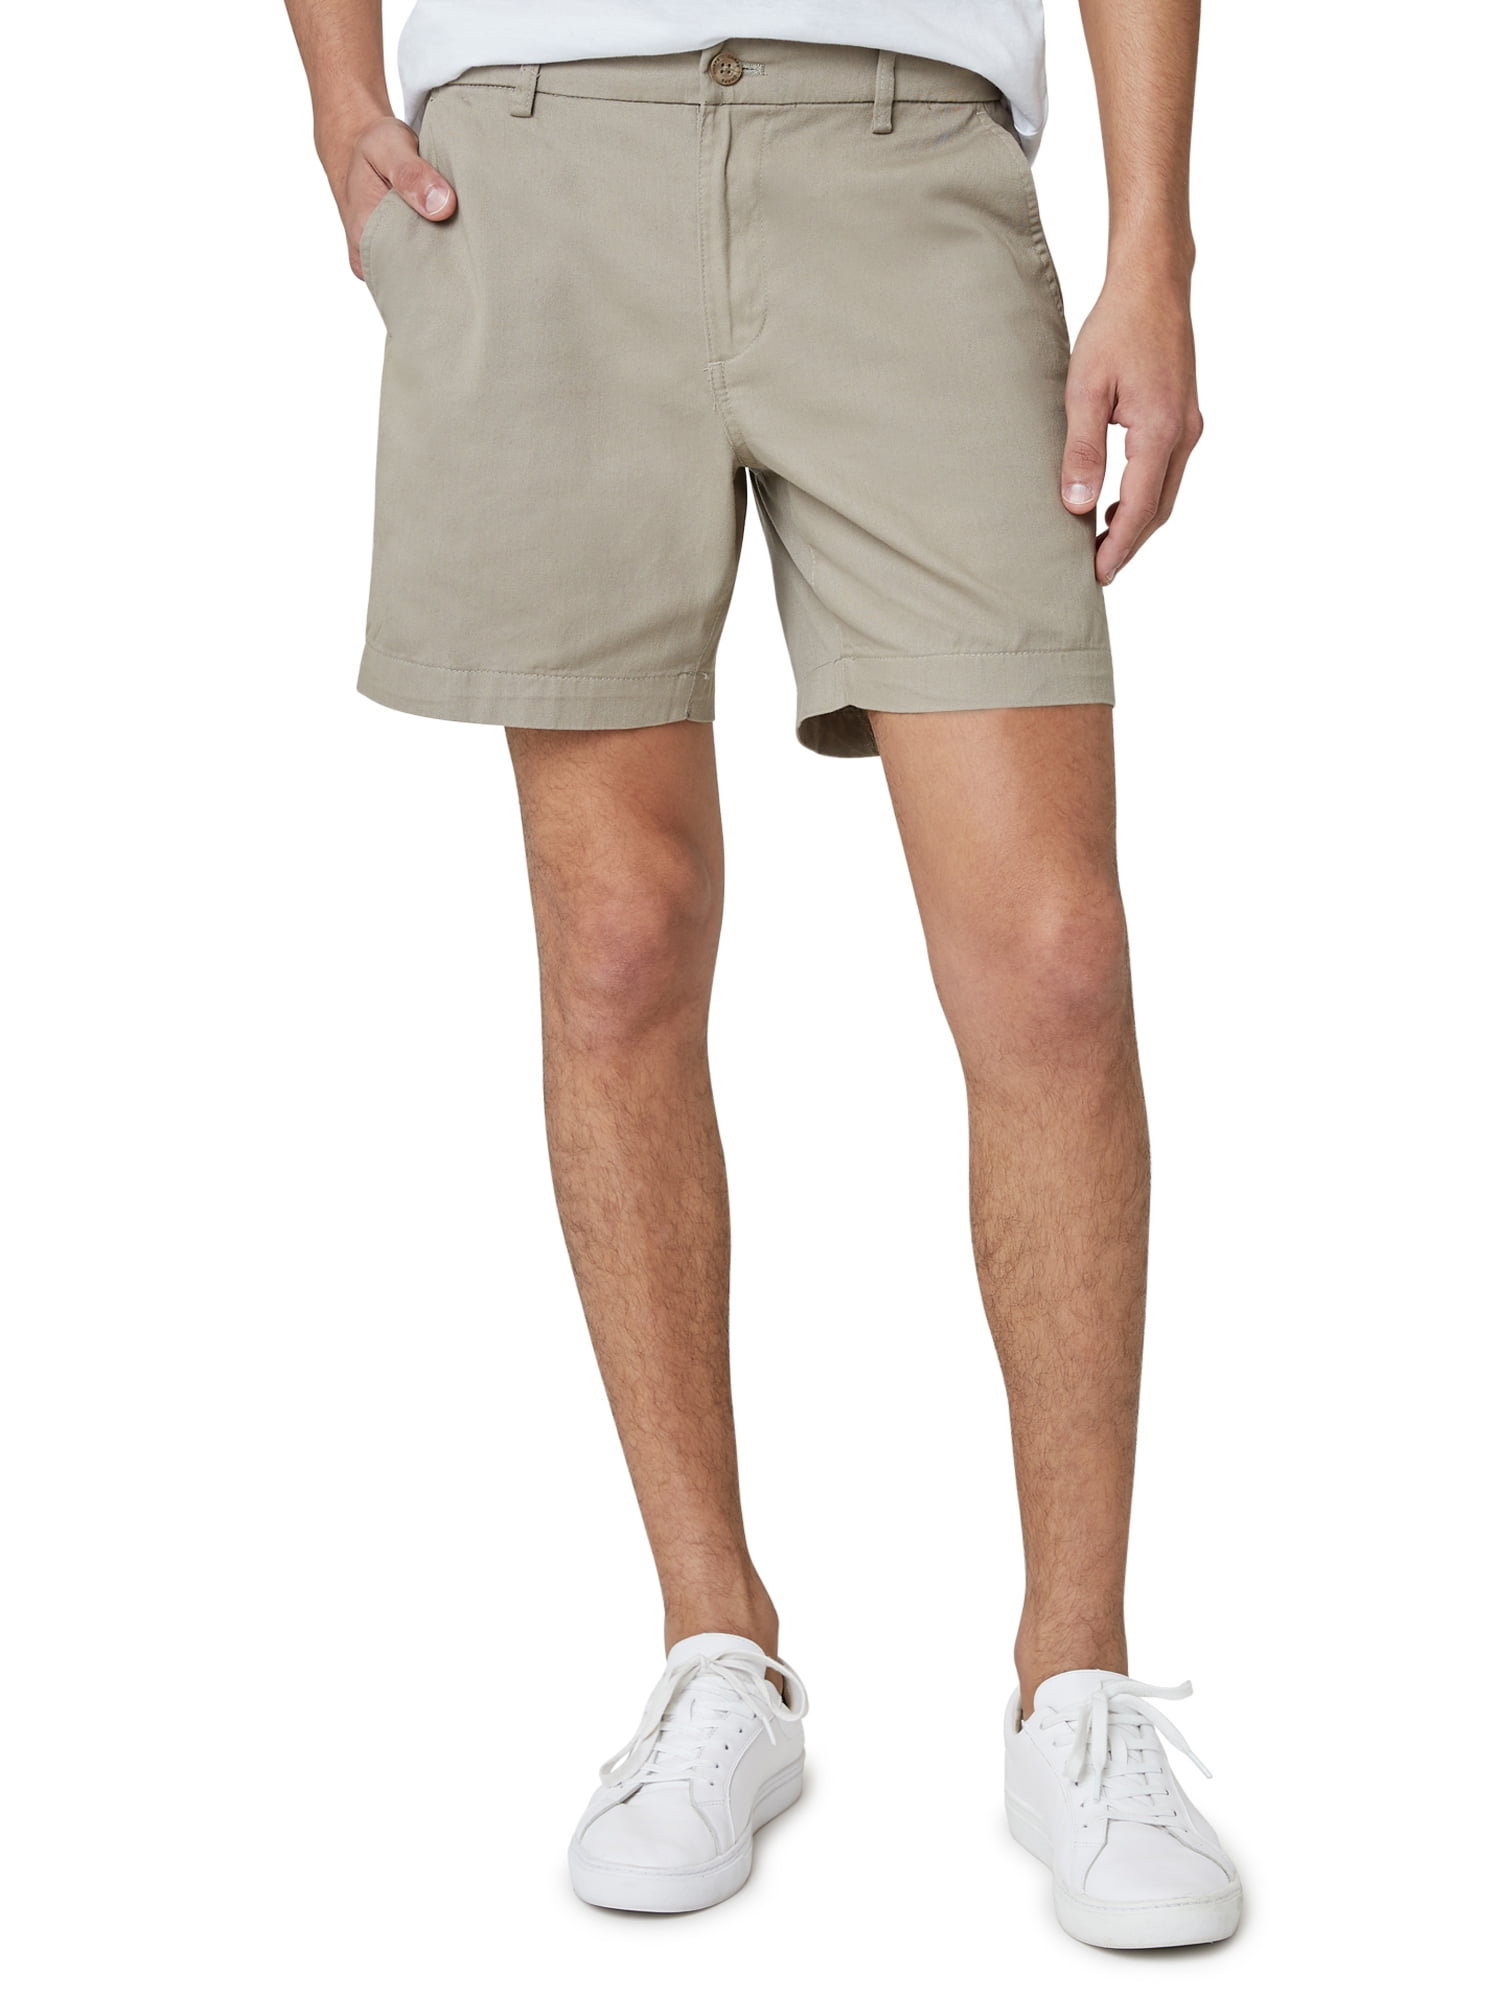 NEW GAP for Good Men's Tan Khaki Shorts 10" Inseam Size 36 